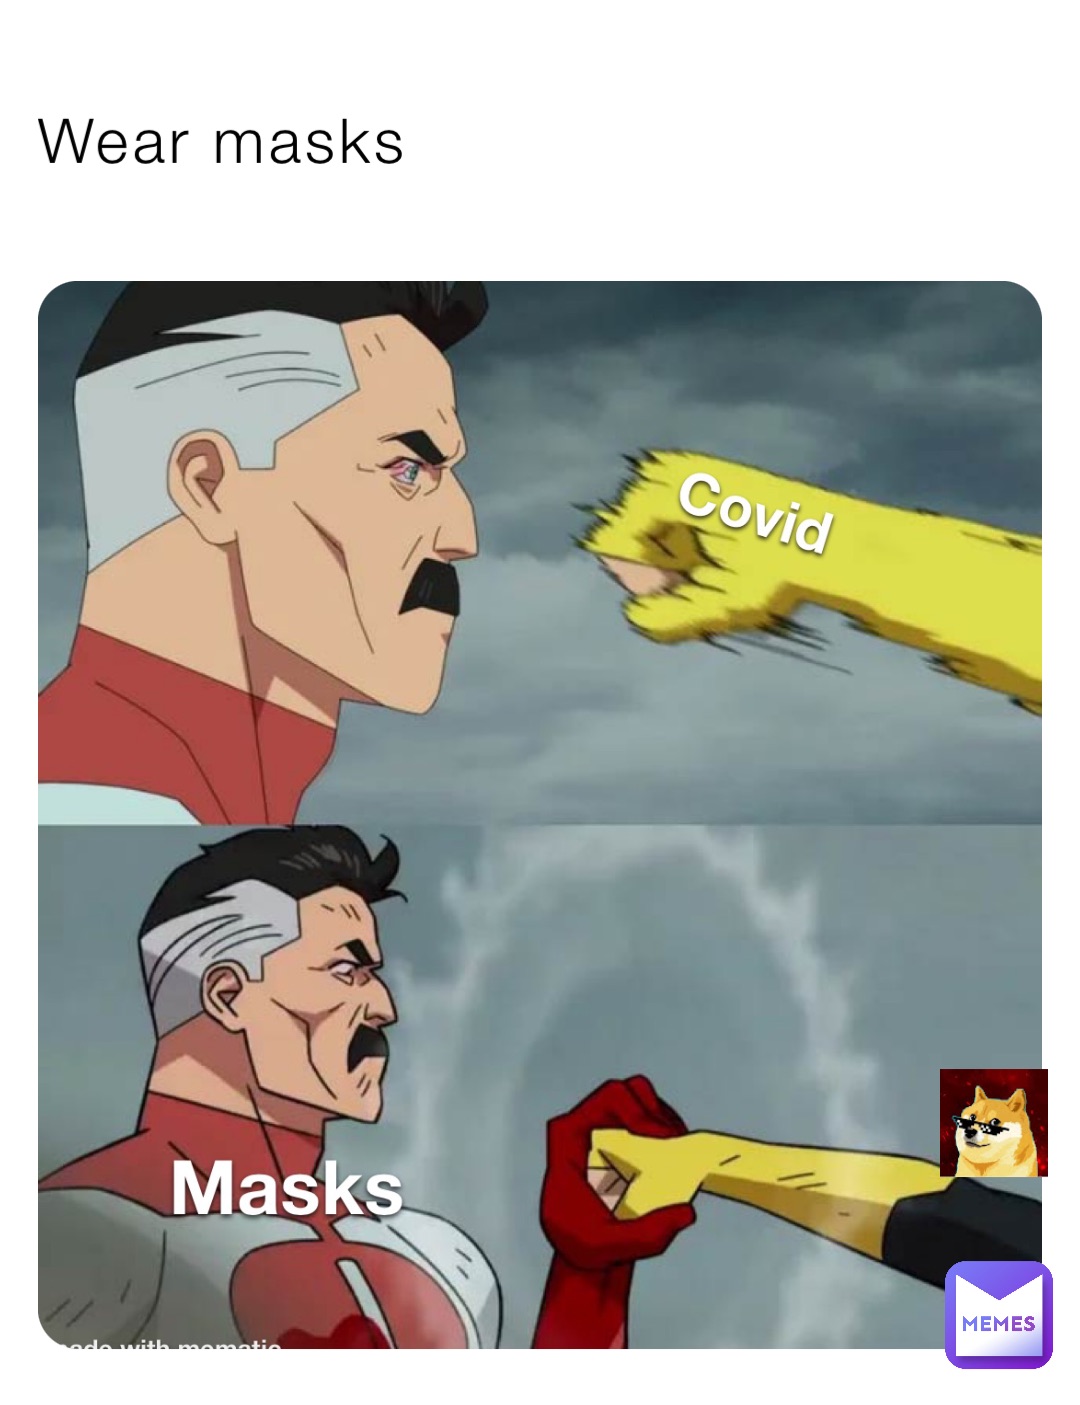 Wear masks